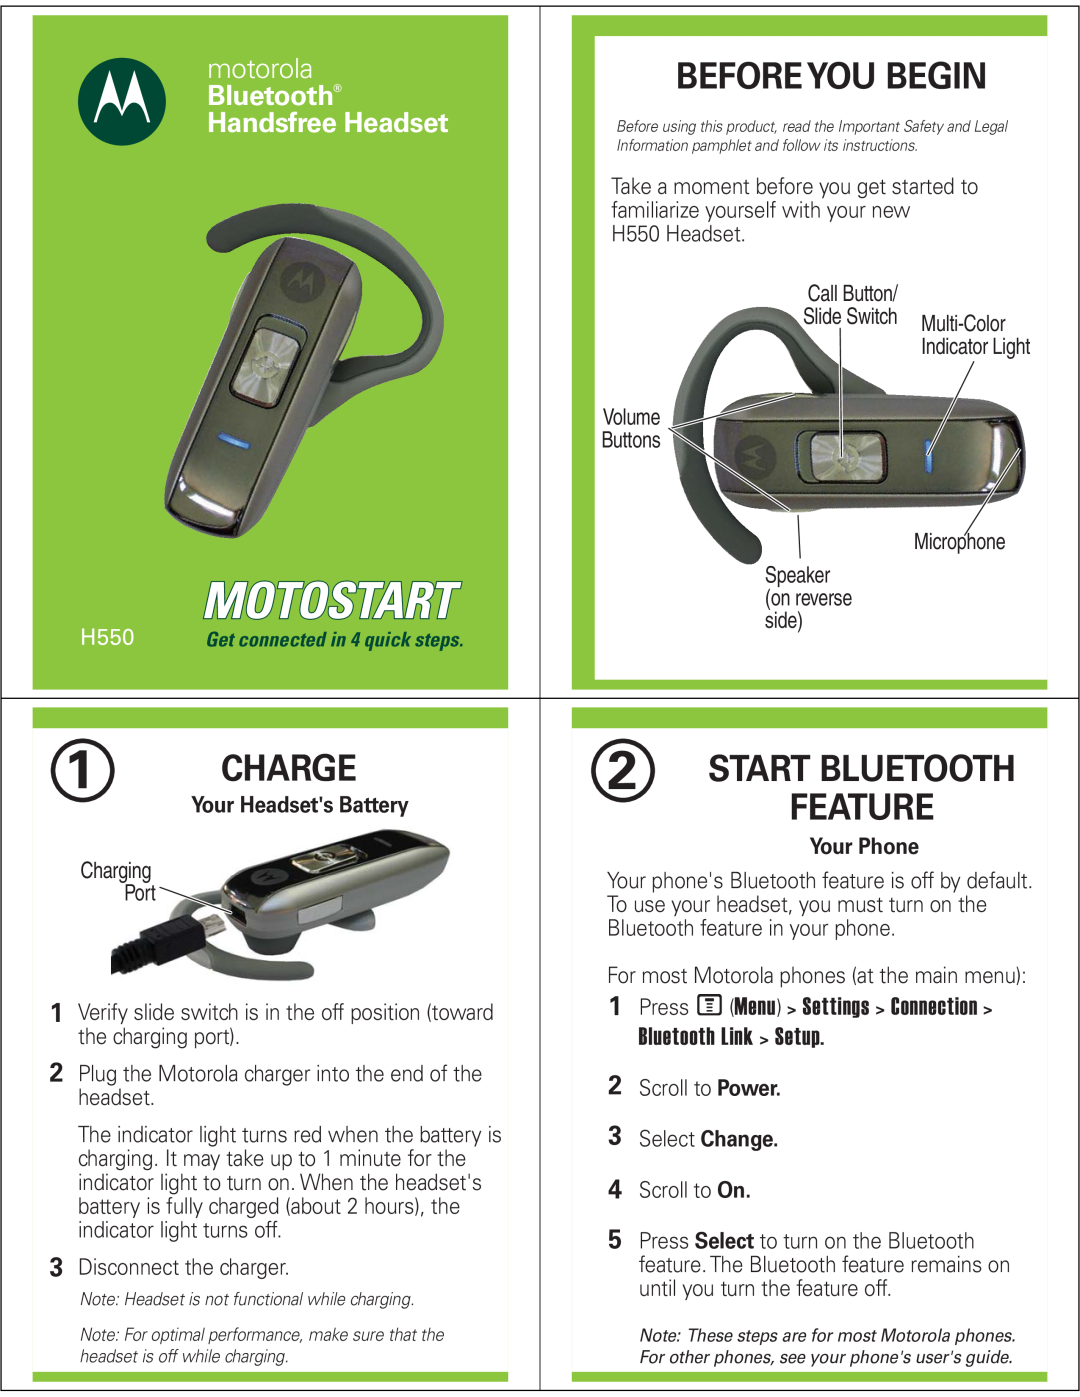 Motorola H550 manual Charge, Before You Begin, Start Bluetooth, Feature, Press MMenu Settings Connection, motorola 